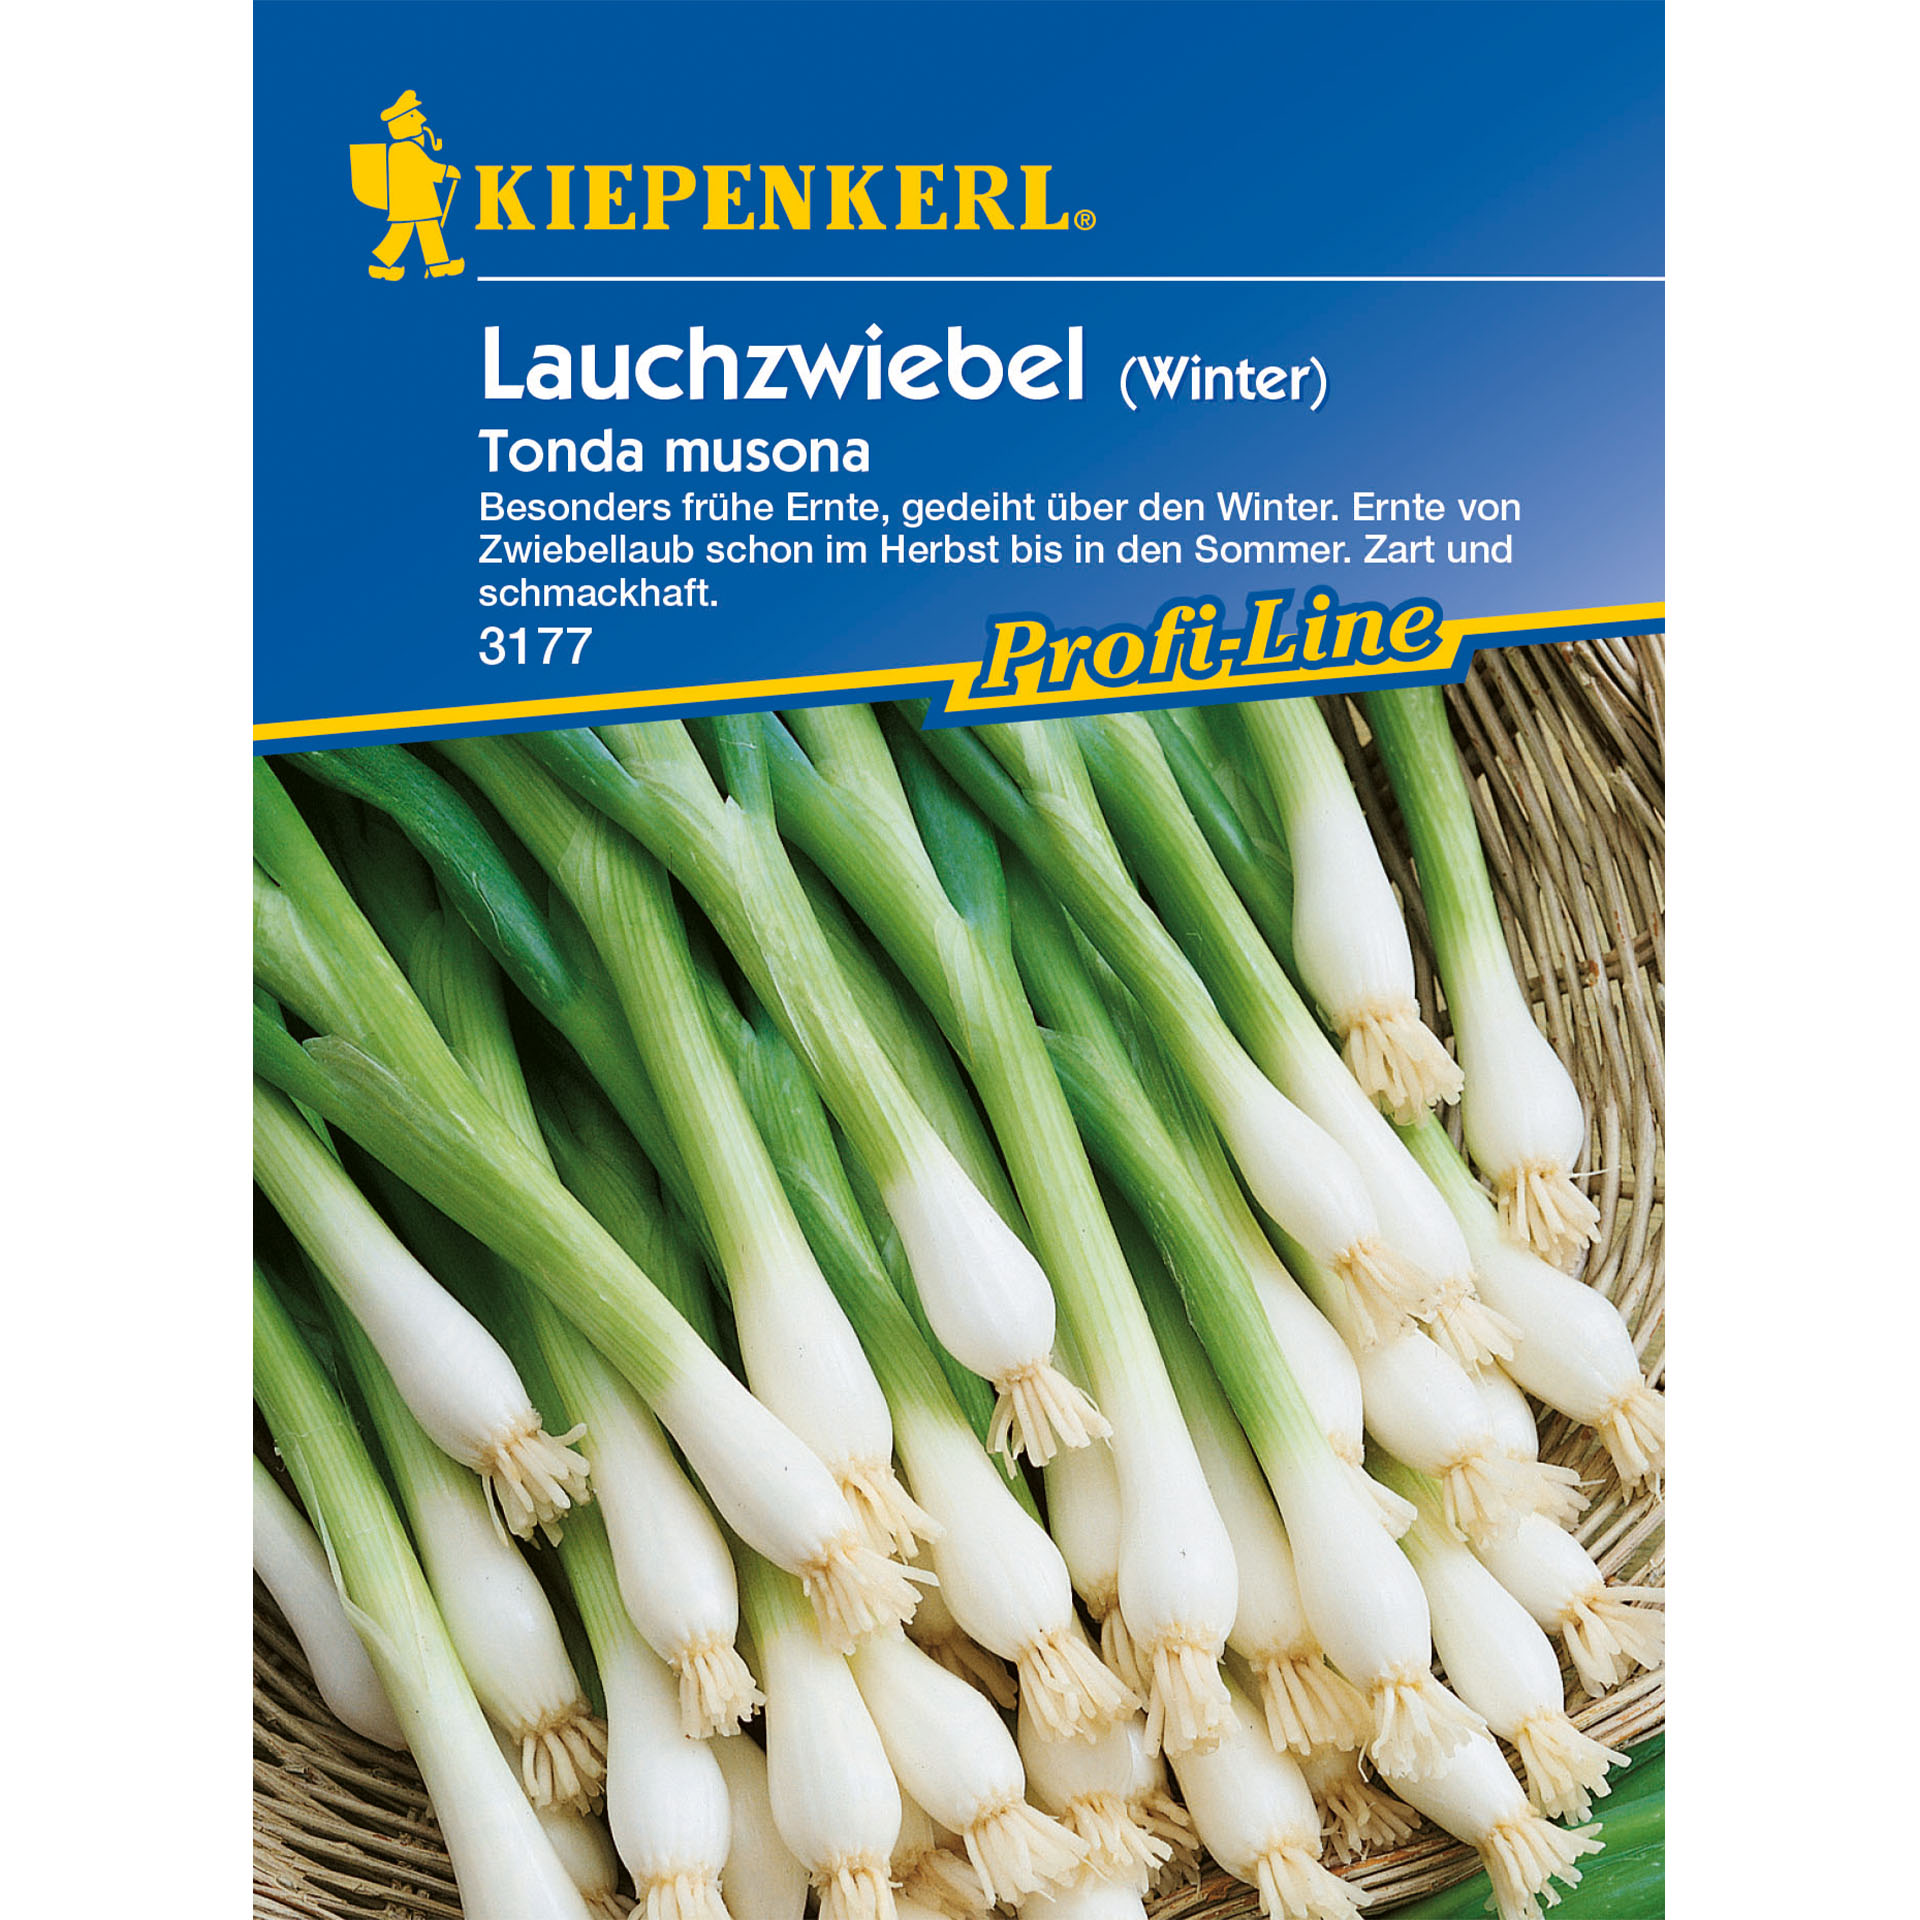 Lauchzwiebel (Winter) Tonda musona, Gemüsesamen